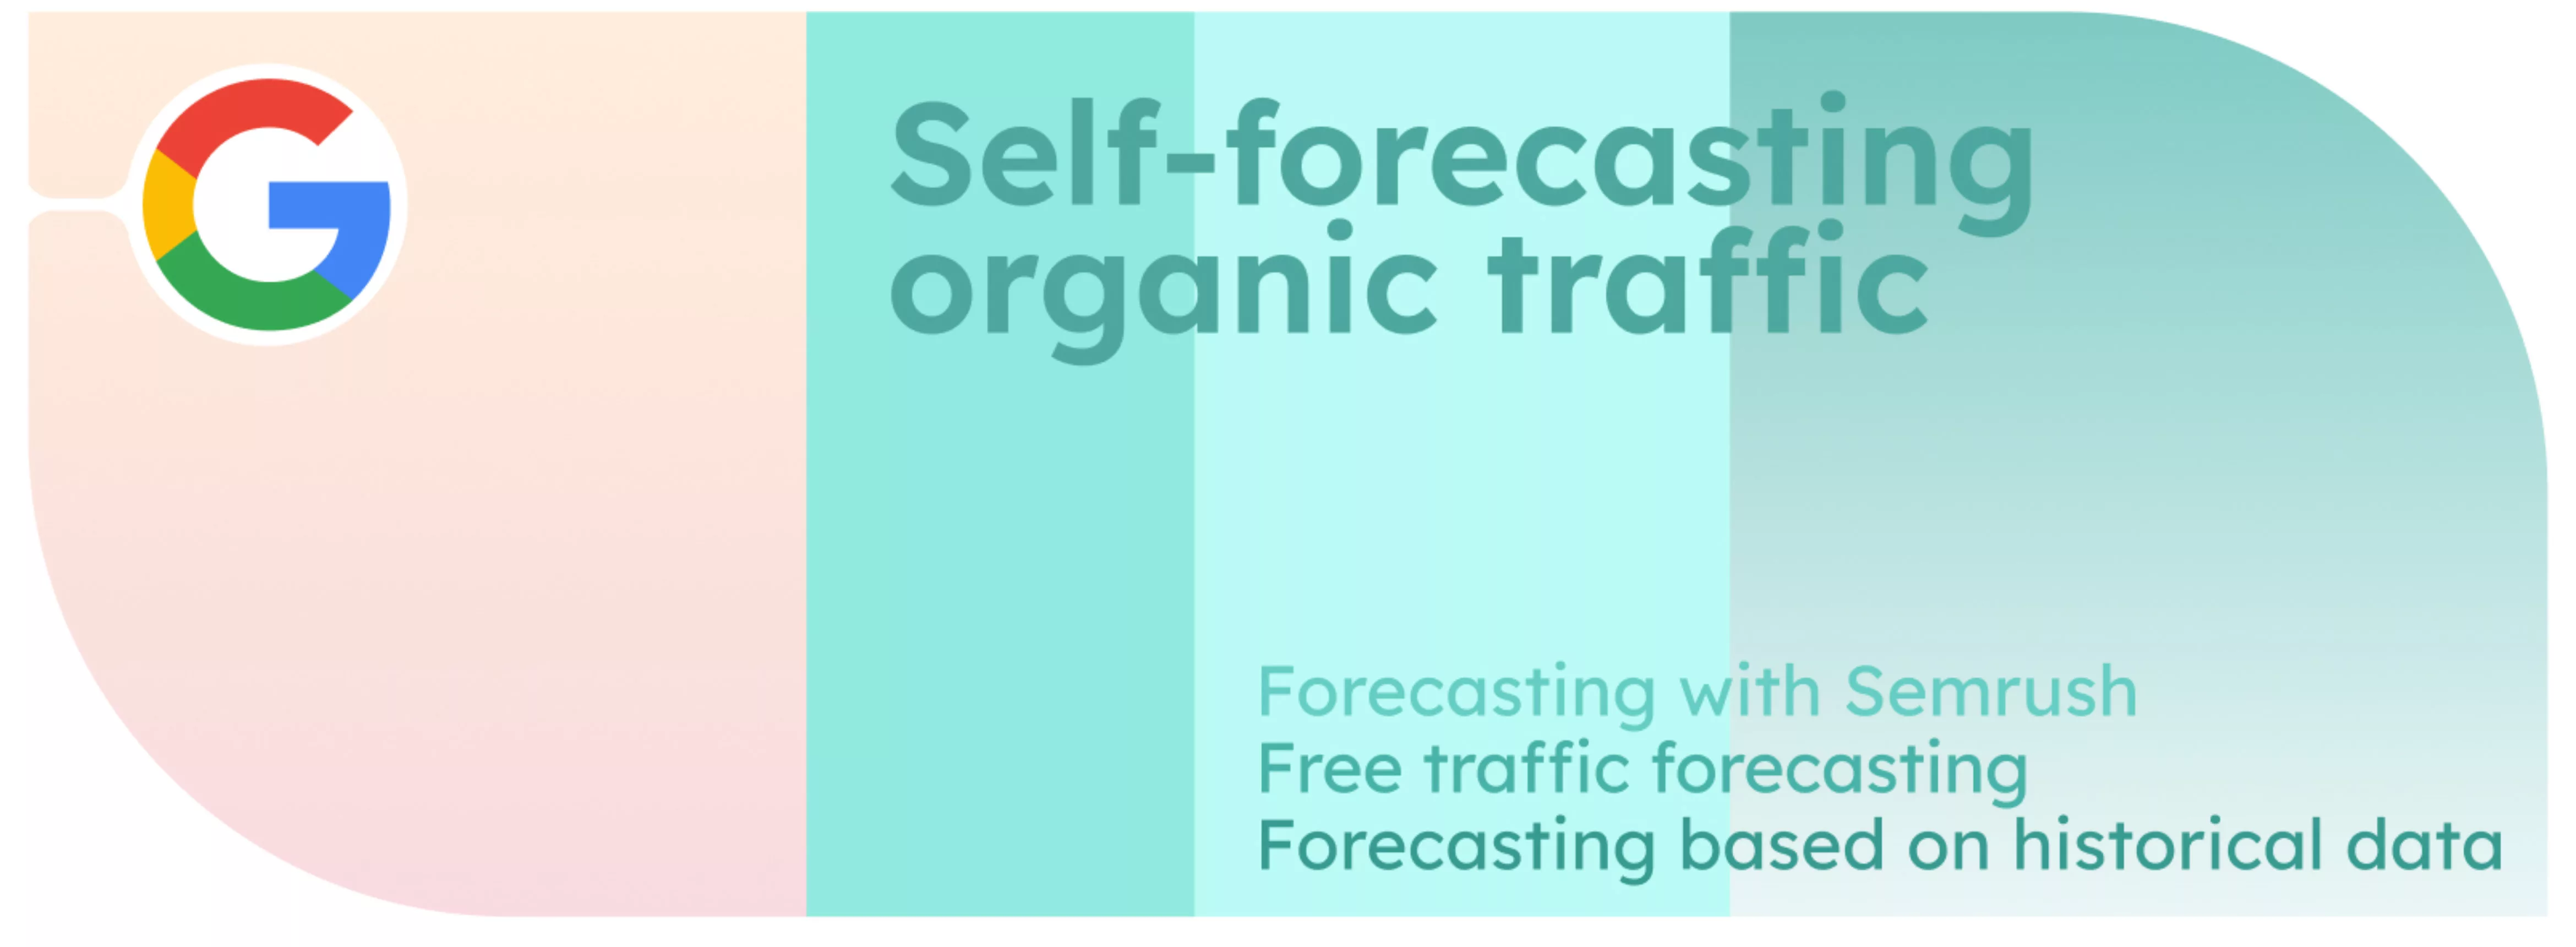 Self-forecasting organic traffic